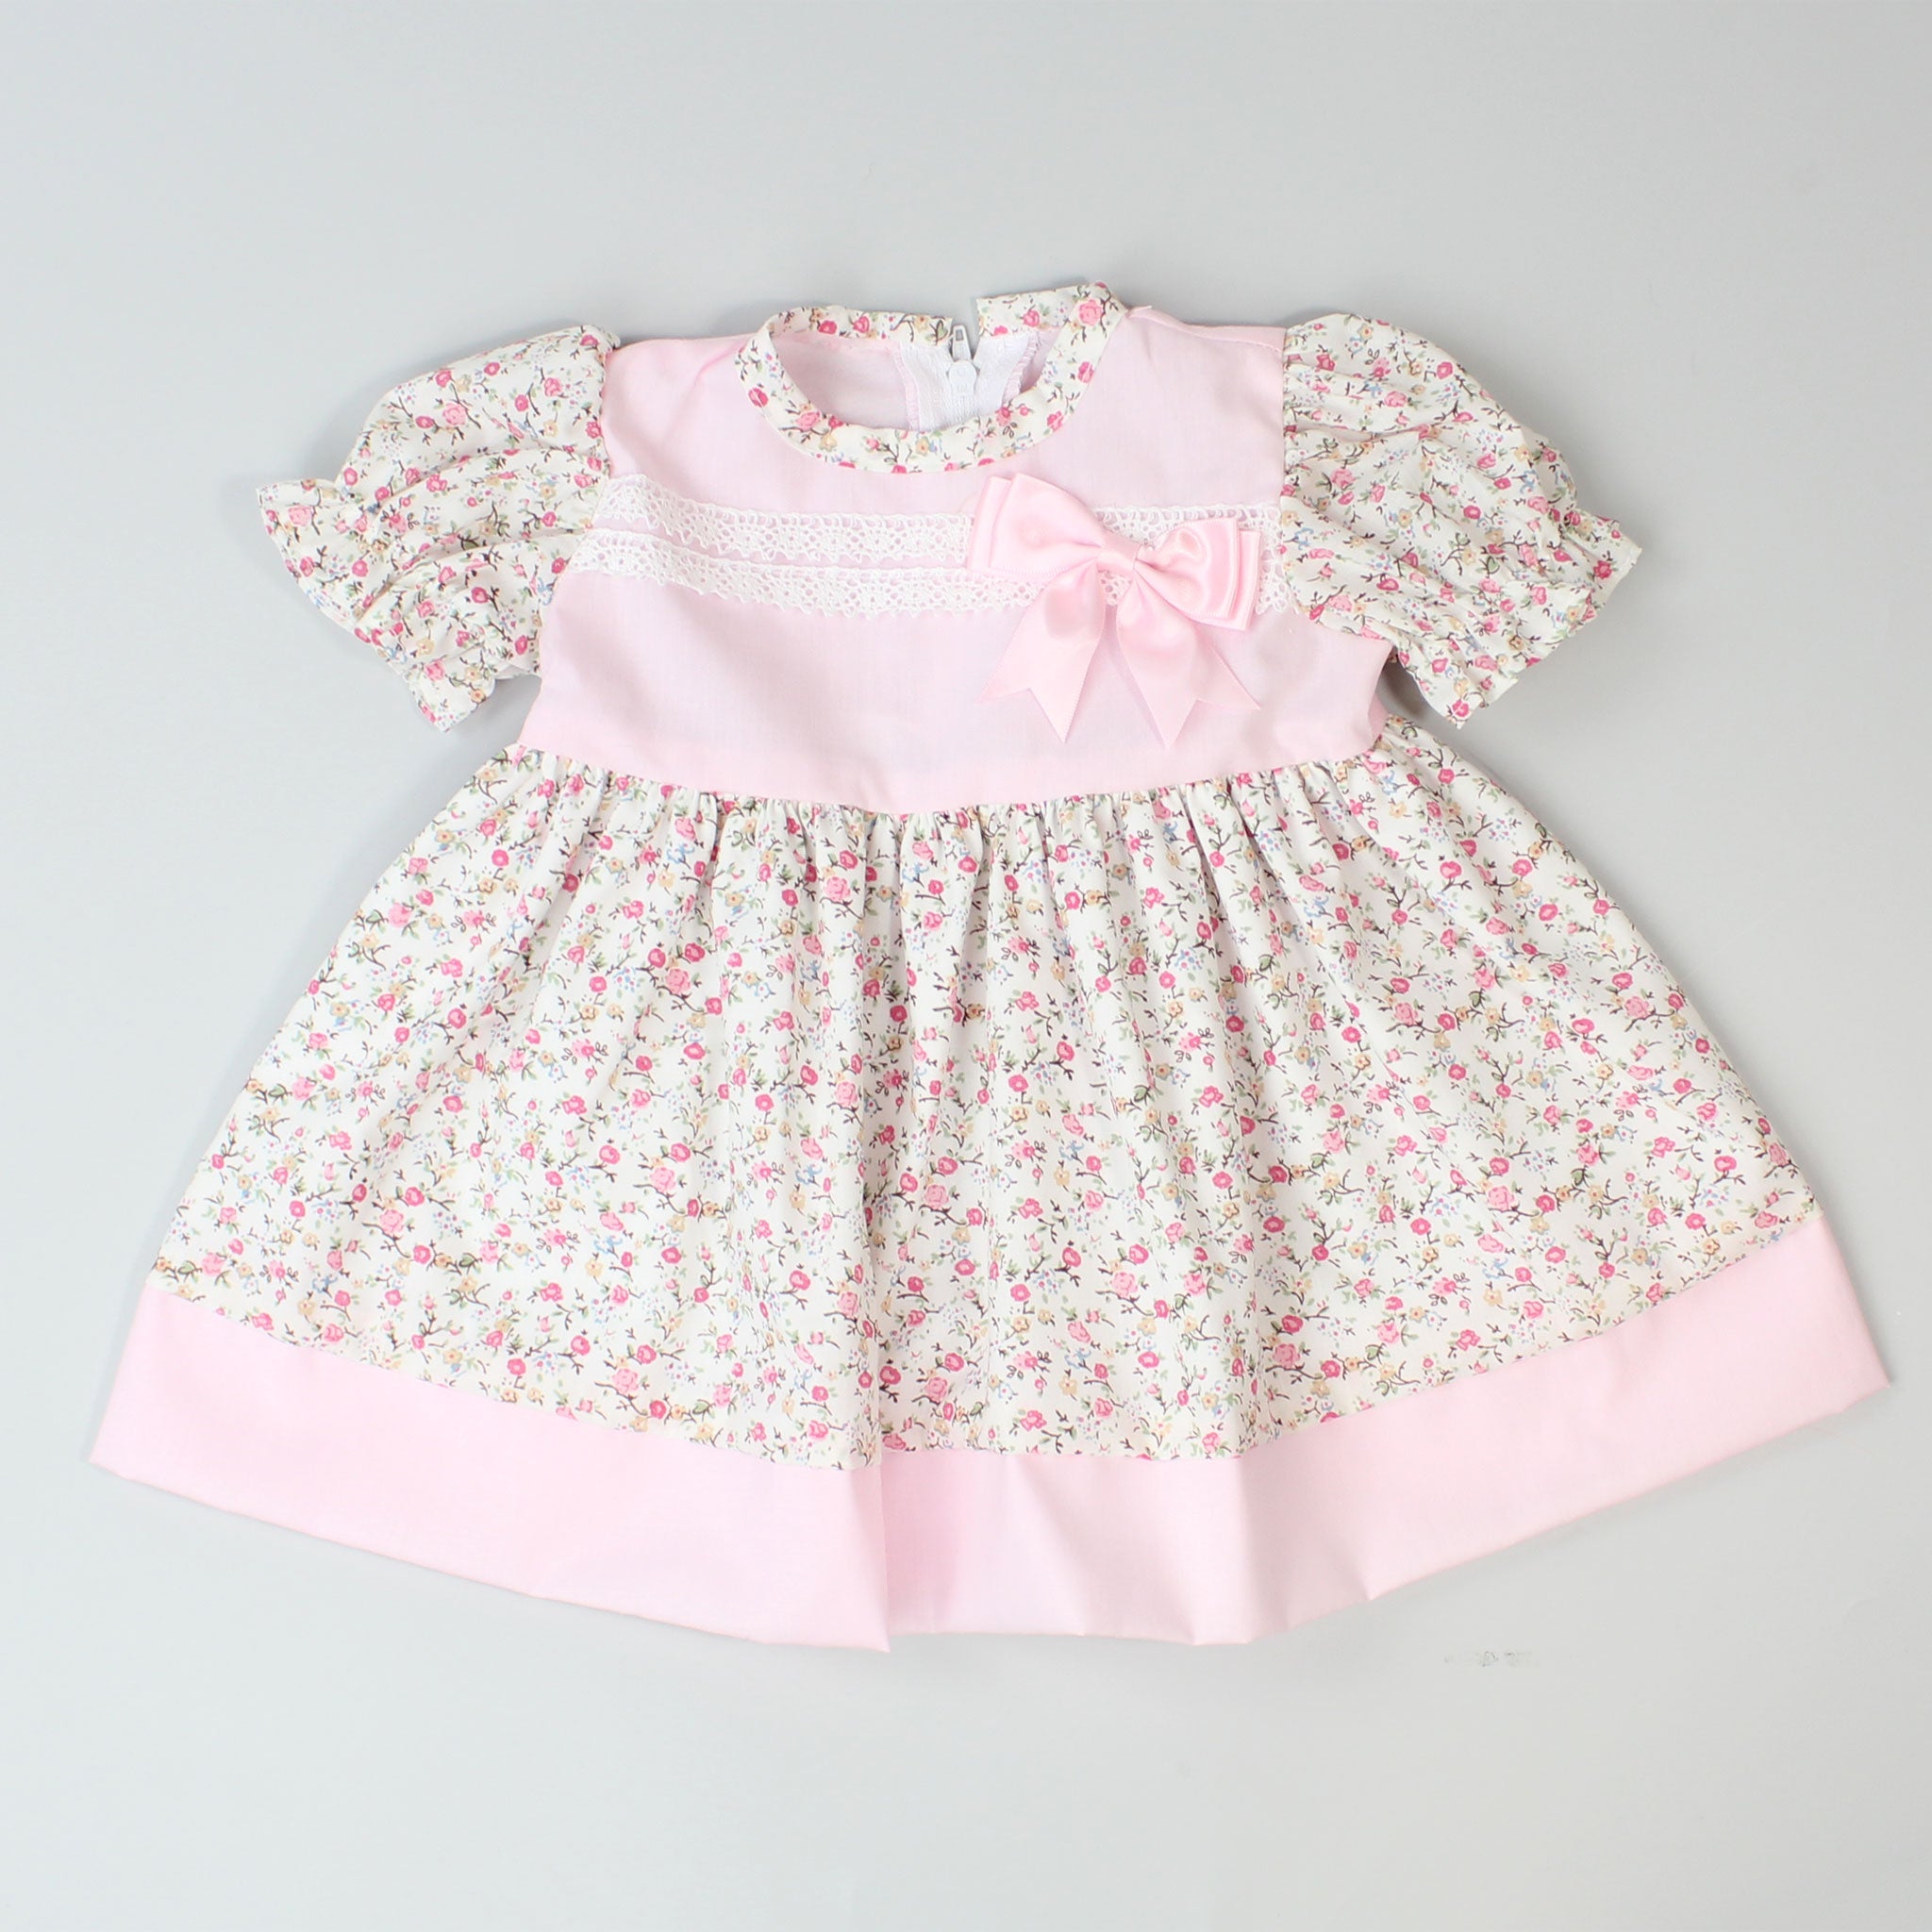 Baby girls flower dress in pink